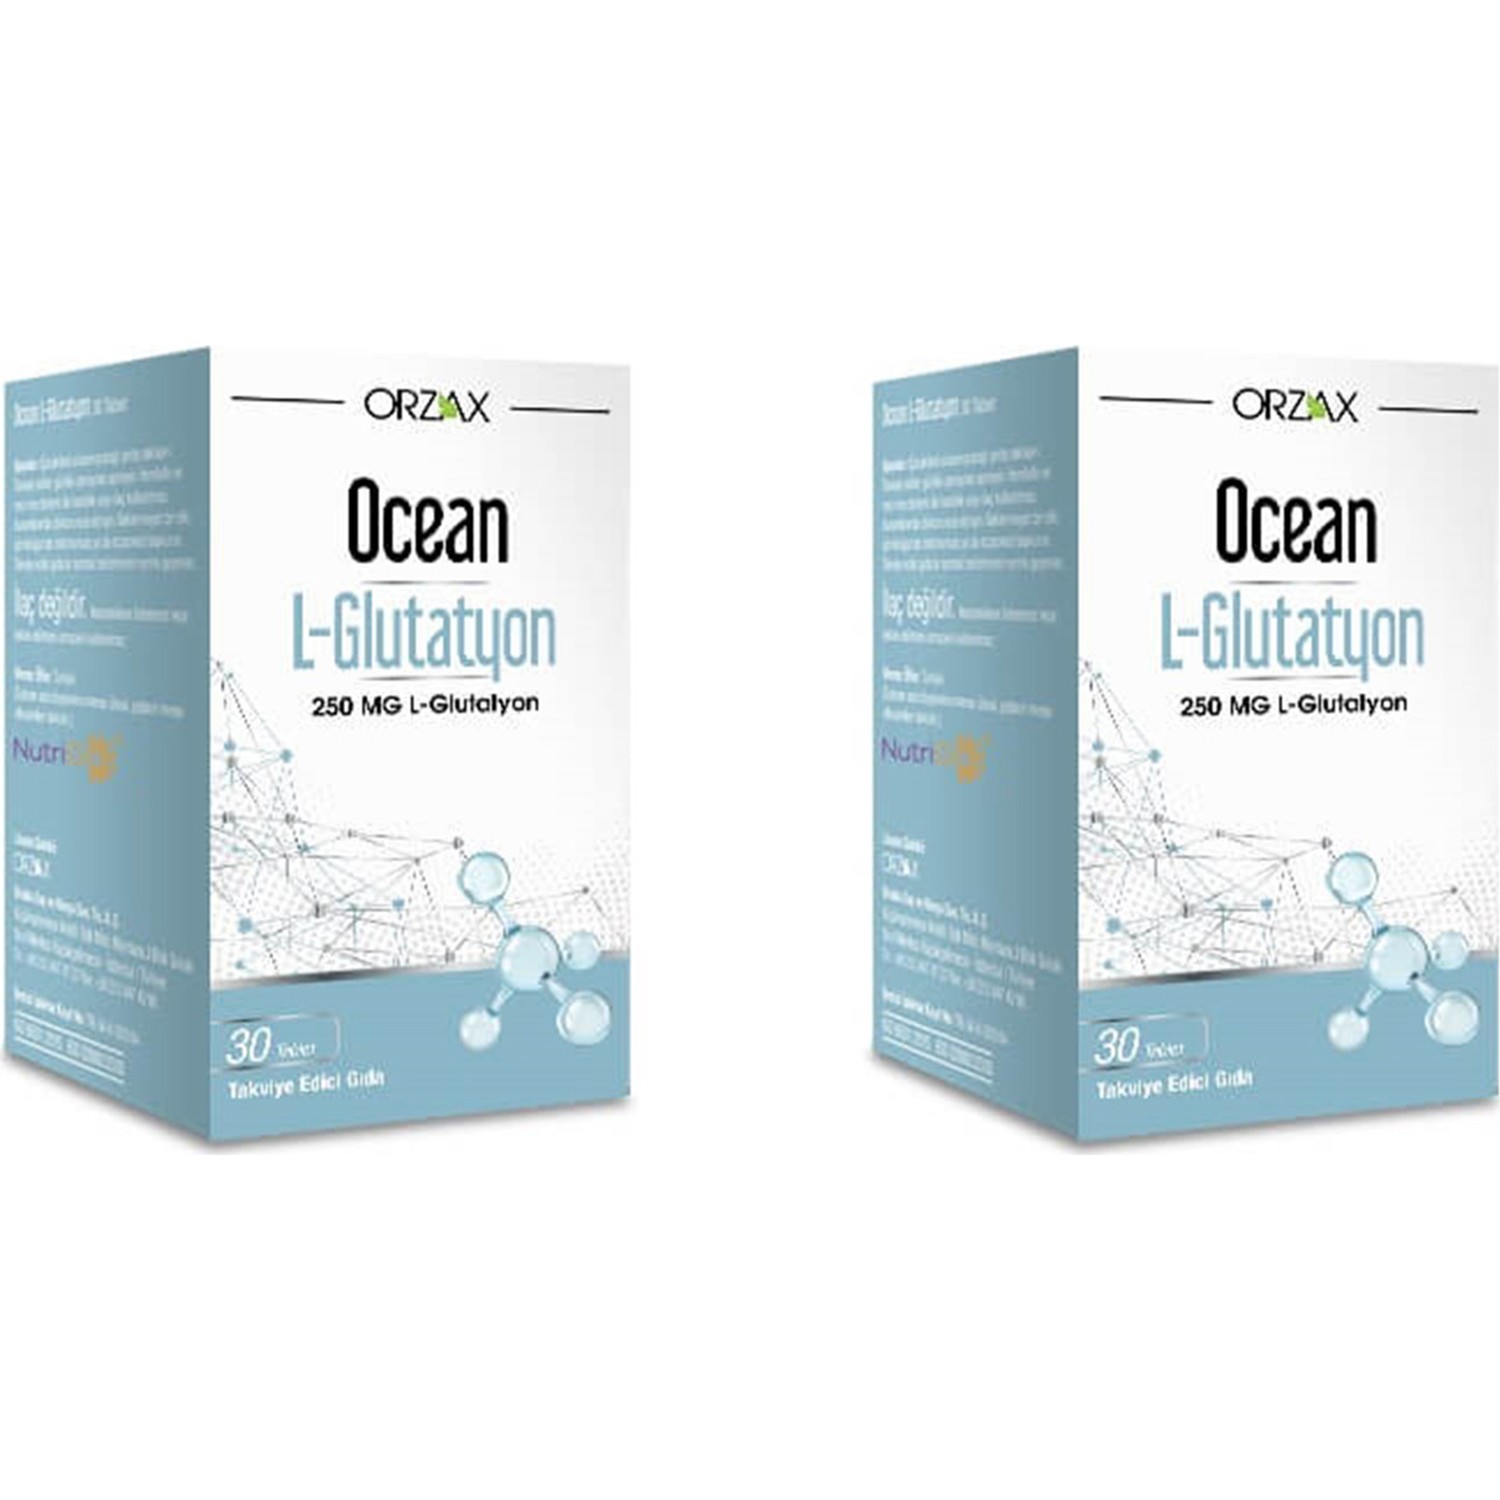 гепарамакс форте адеметионин 400 мг 30 таблеток L-глутатион Orzax Ocean 250 мг, 2 упаковки по 30 таблеток